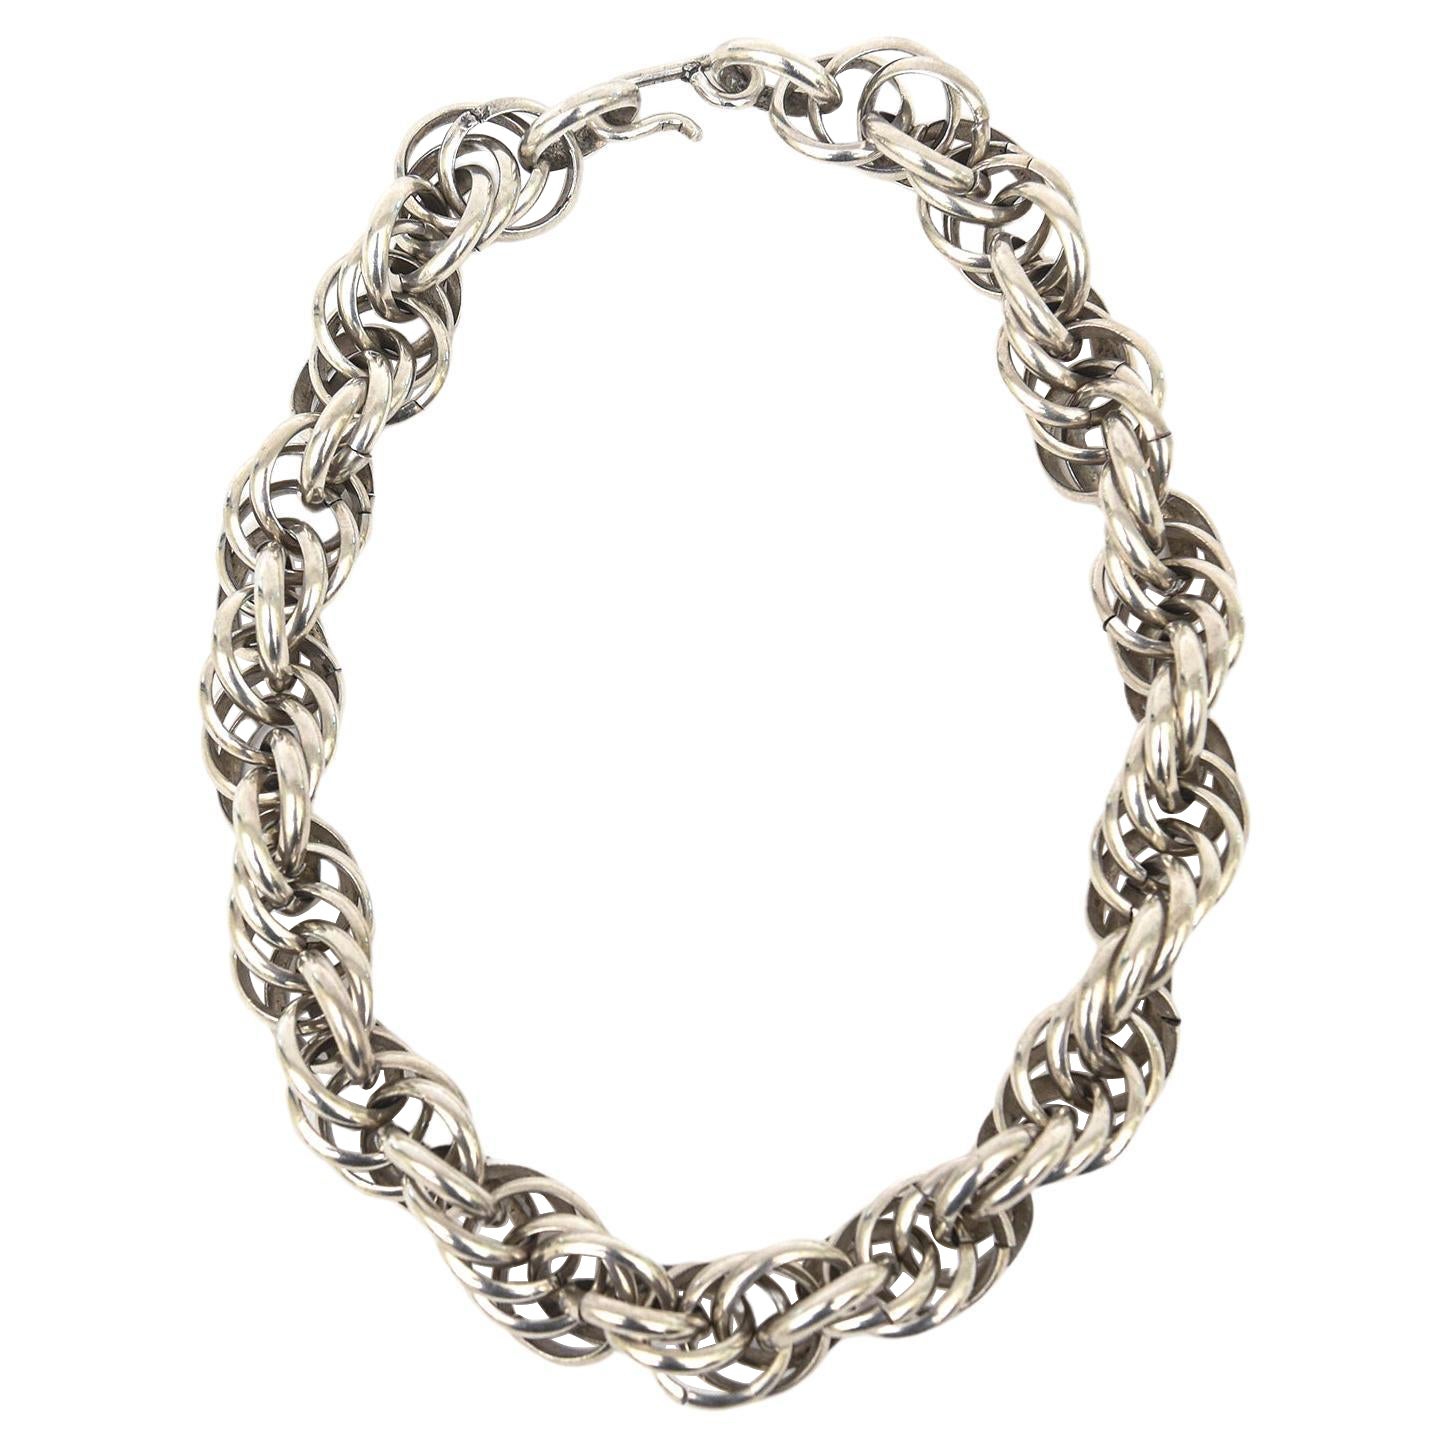 A Silver Vintage Italian Hallmark Twisted Link Sculptural Collar Necklace (Collier)